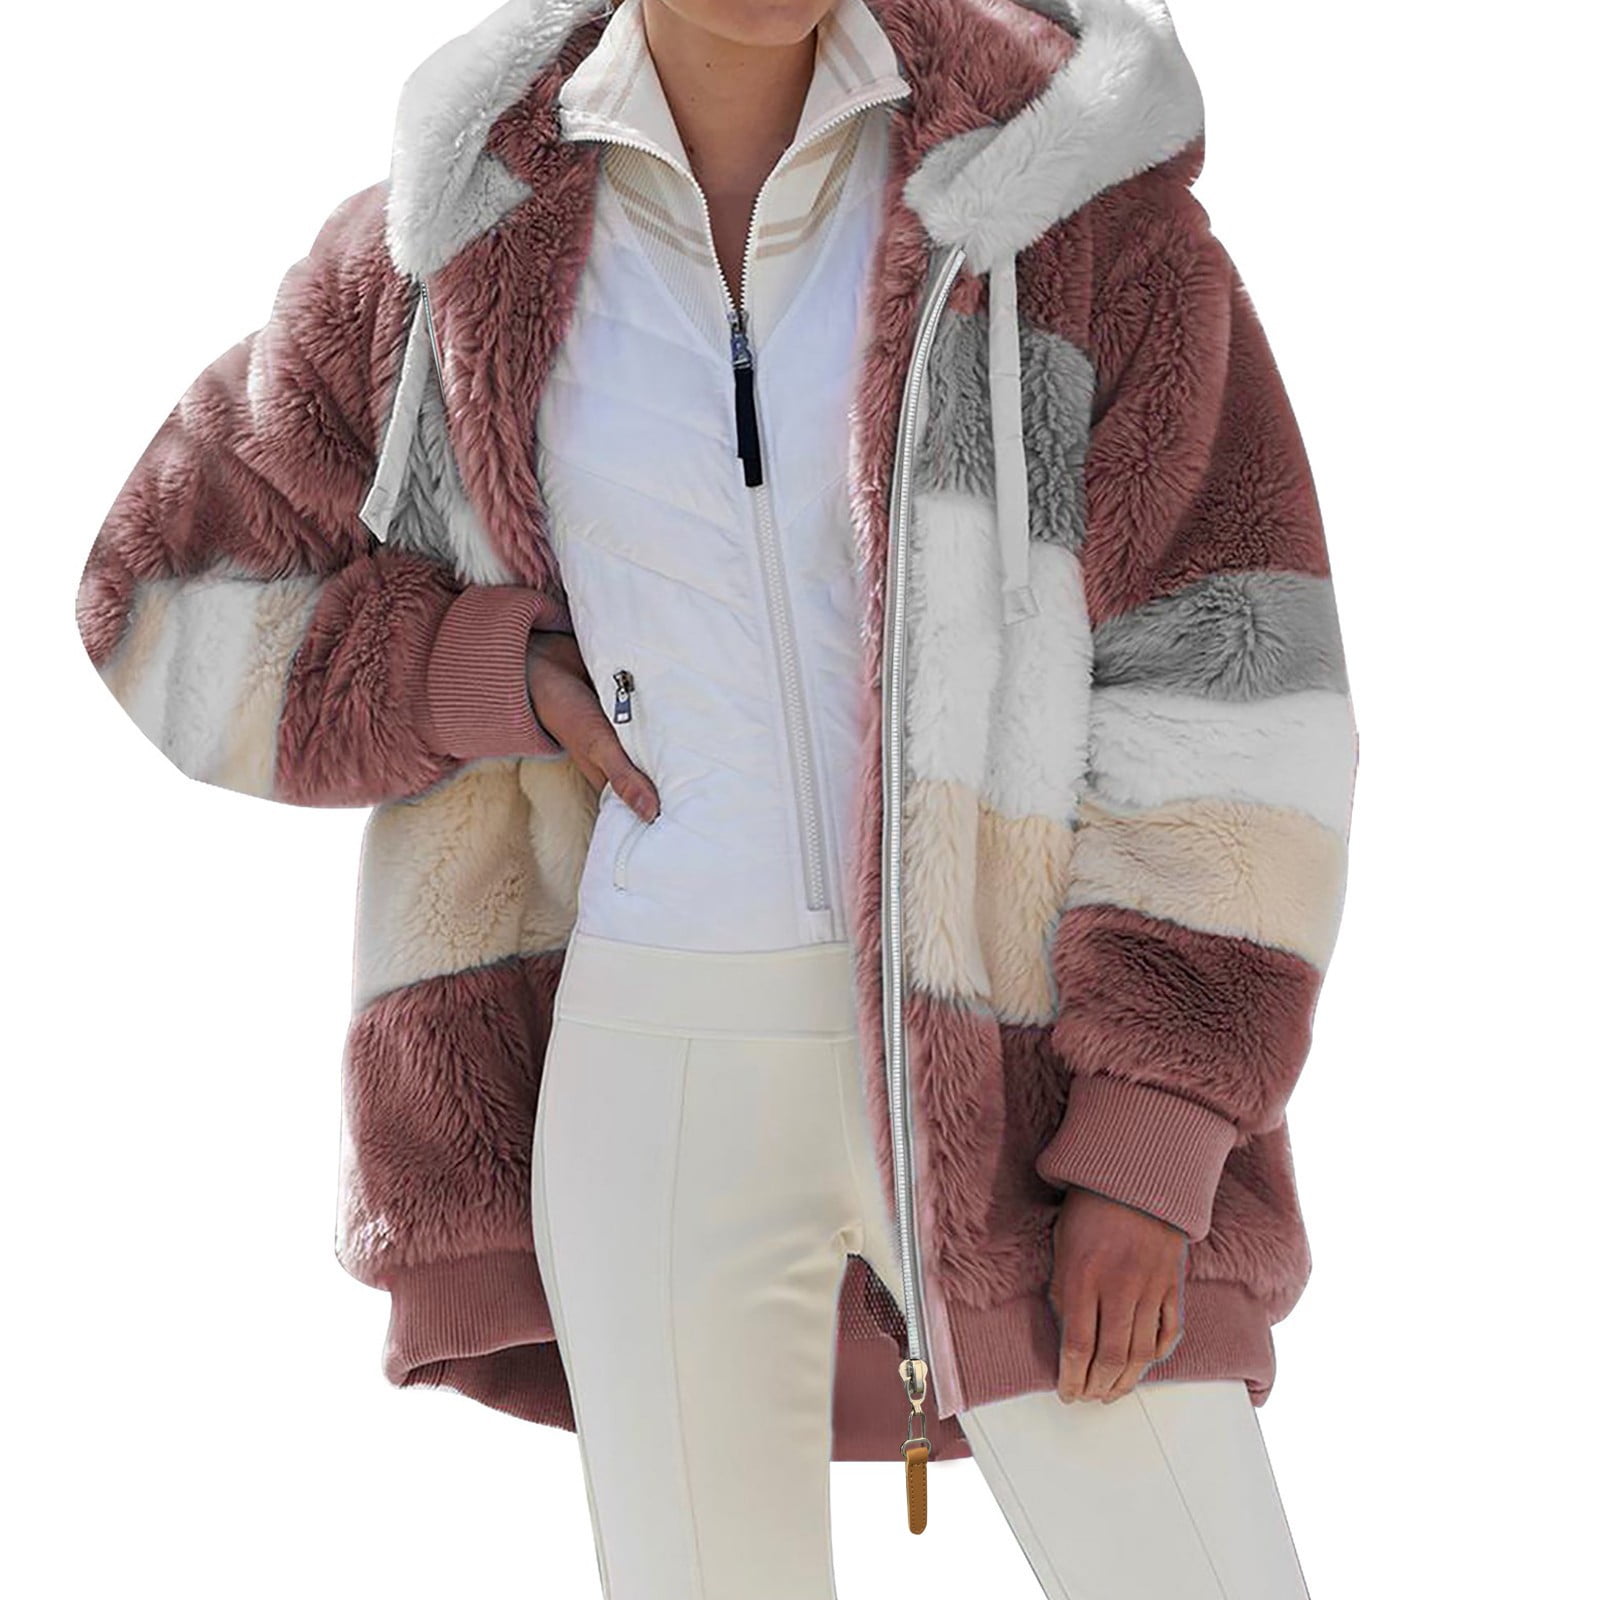 VBXOAE Women's Winter Coat Hoodies Jacket Plush Pullover